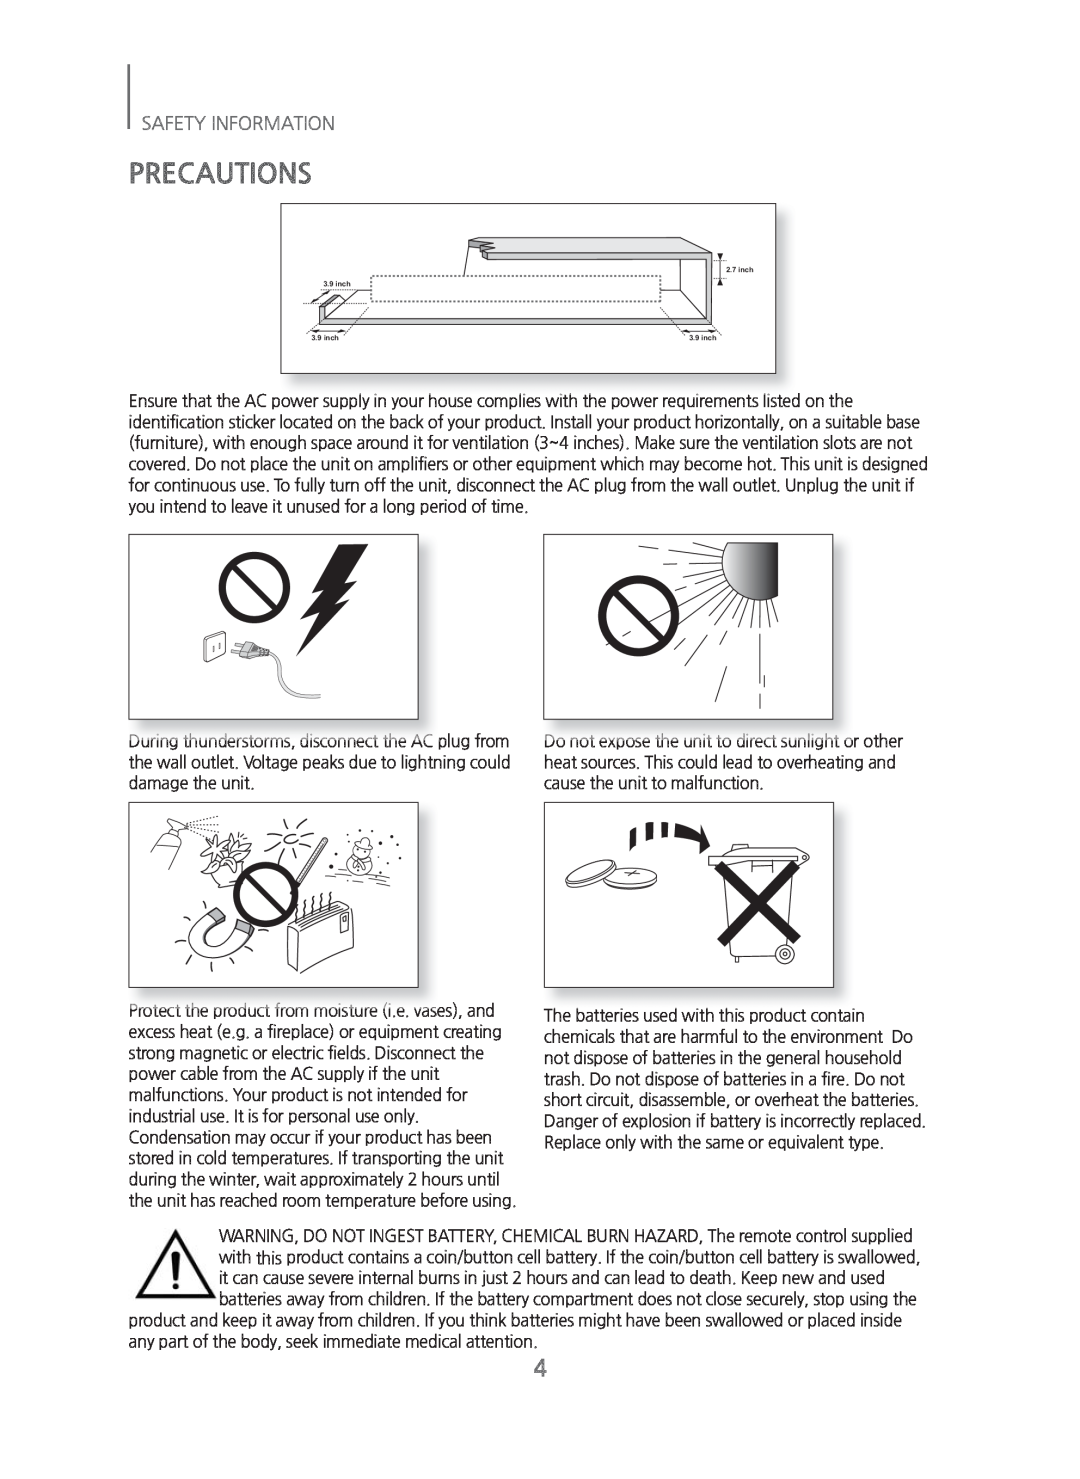 Samsung HW-H450/ZA manual Precautions, Safety Information, inch 